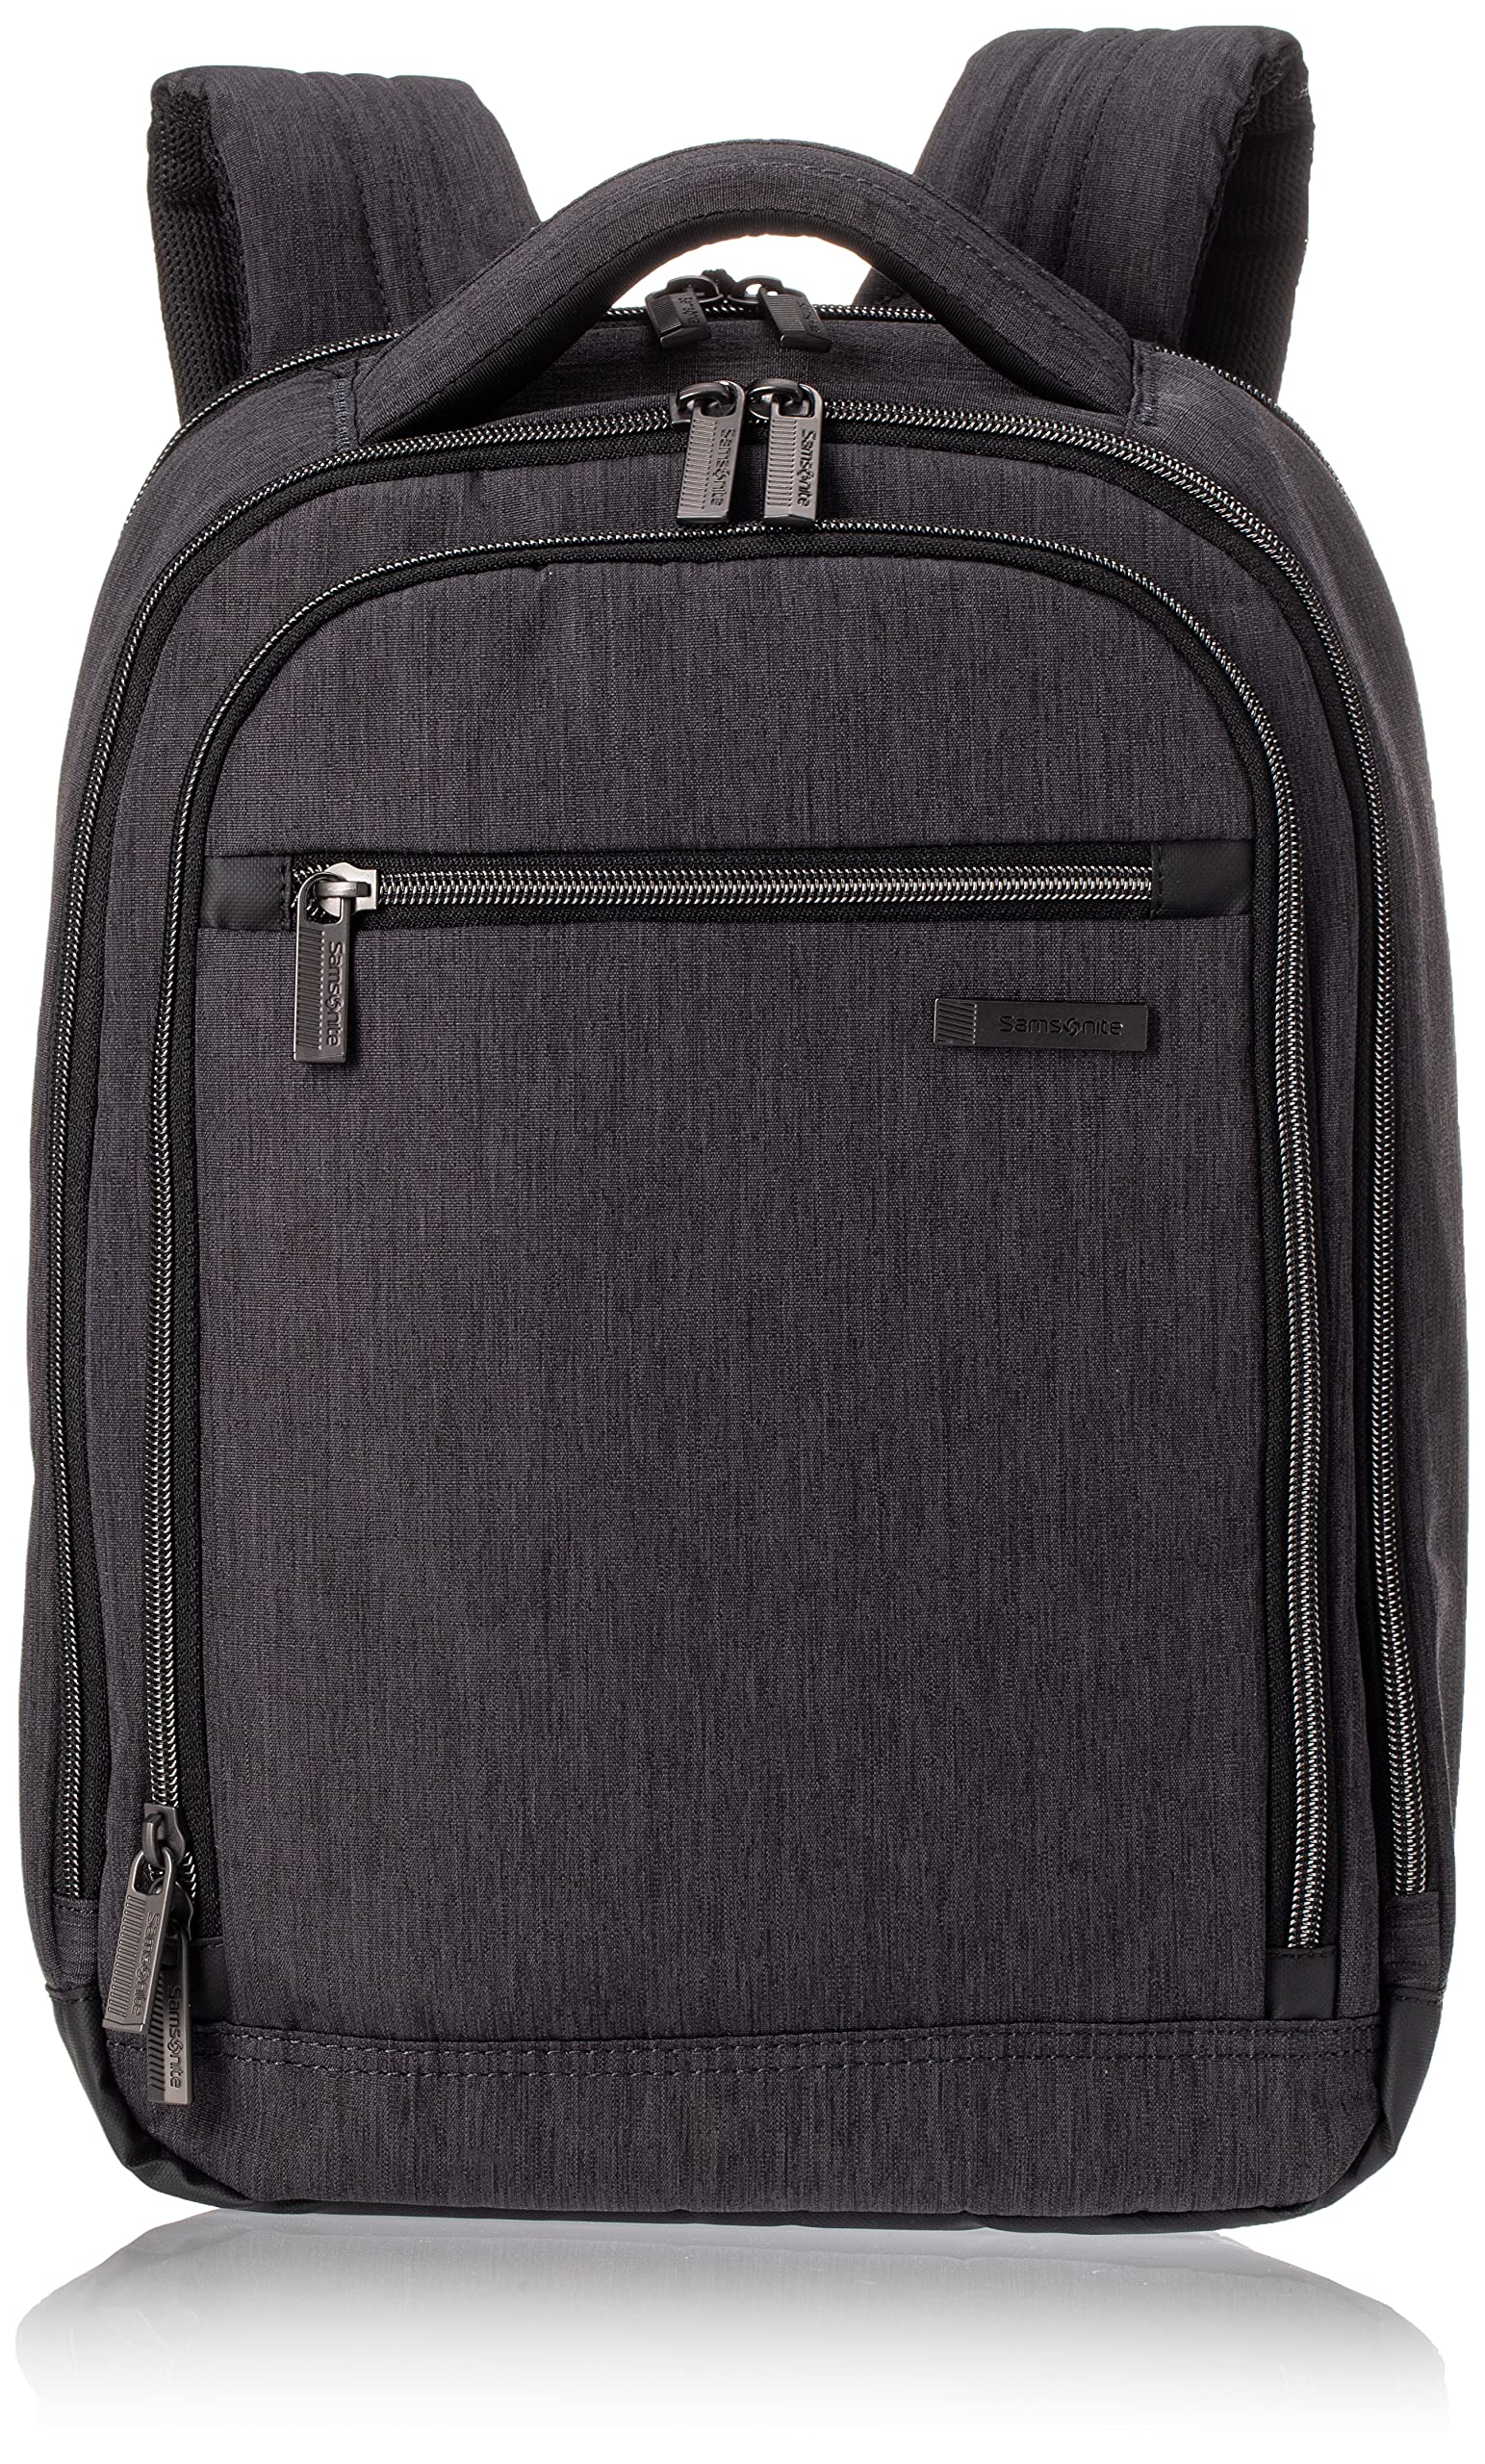 Samsonite Modern Utility Mini Laptop Backpack, Charcoal Heather, One Size